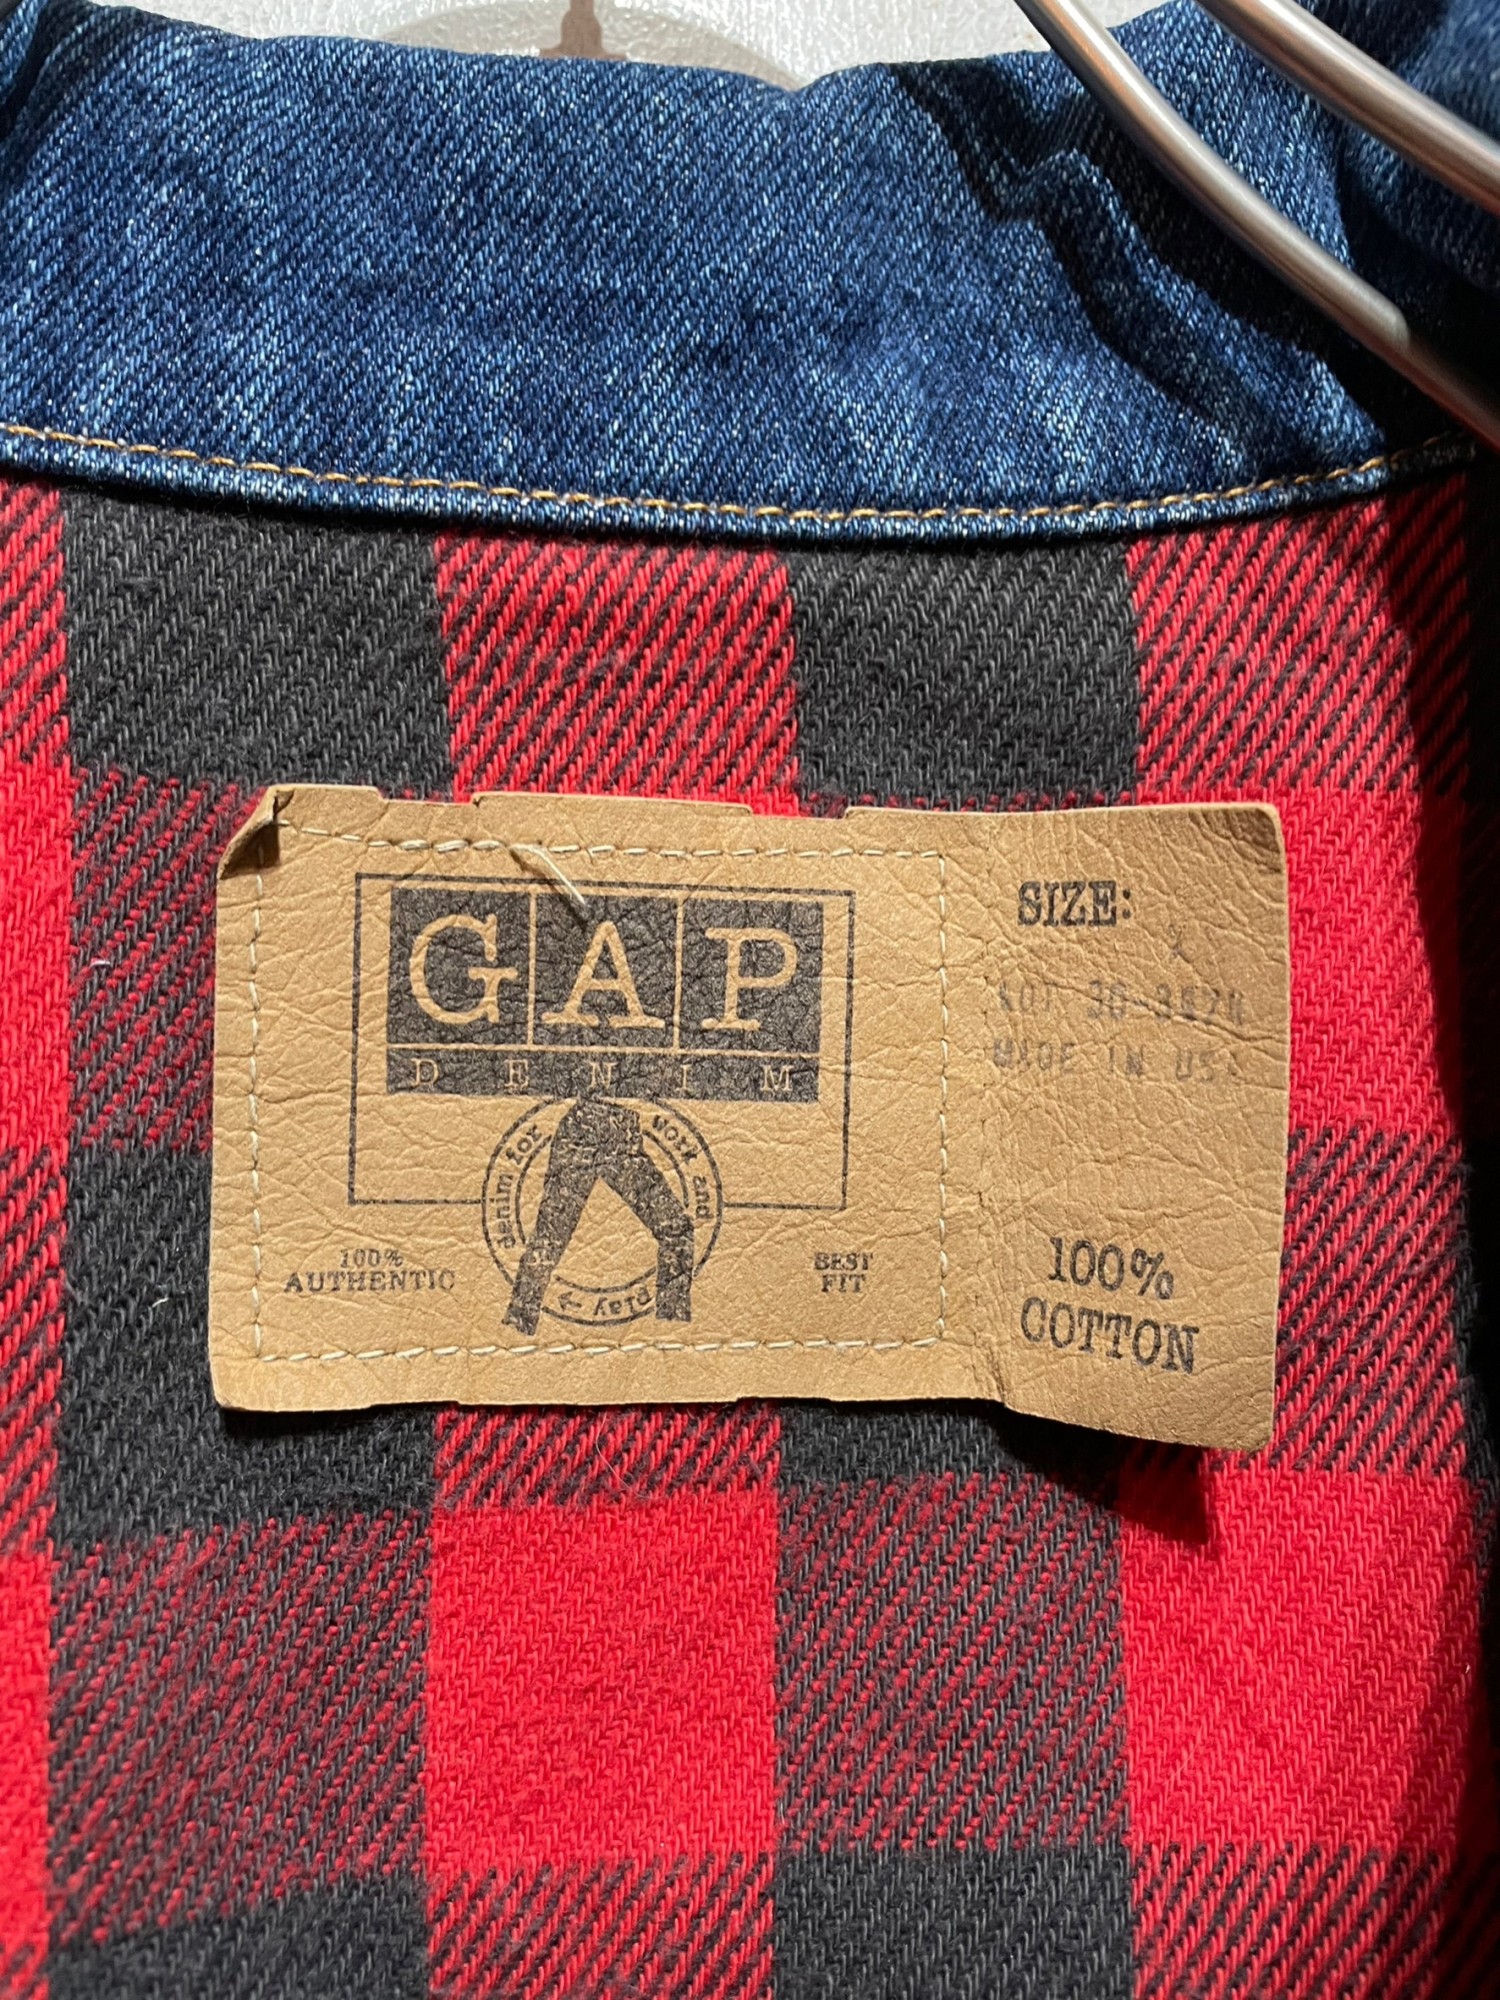 90's "GAP" Flannel Lining Denim Jacket